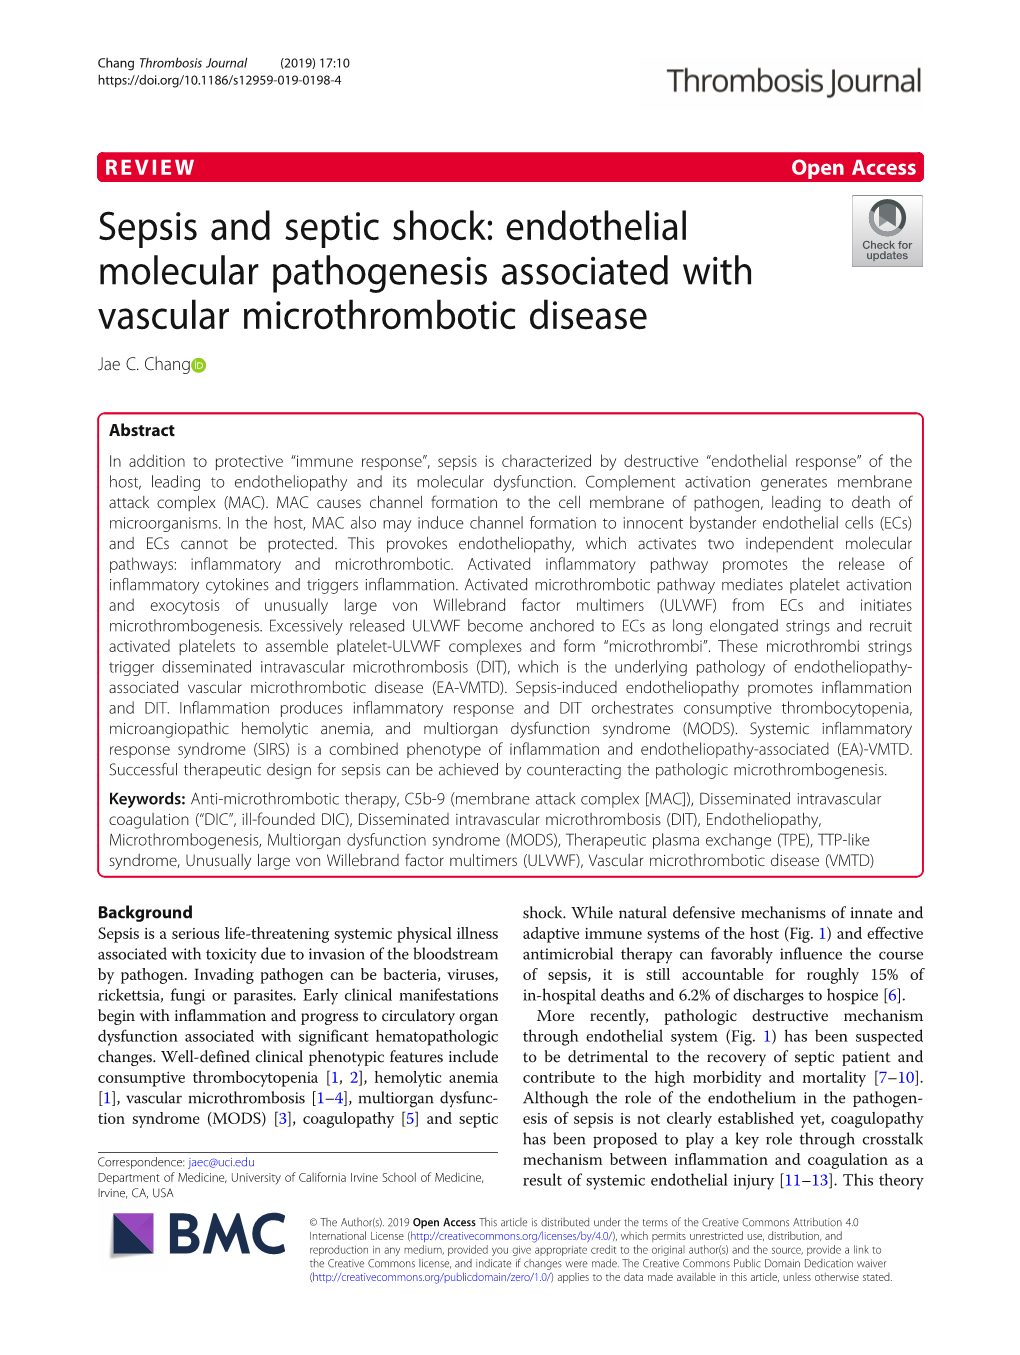 Sepsis and Septic Shock: Endothelial Molecular Pathogenesis Associated with Vascular Microthrombotic Disease Jae C